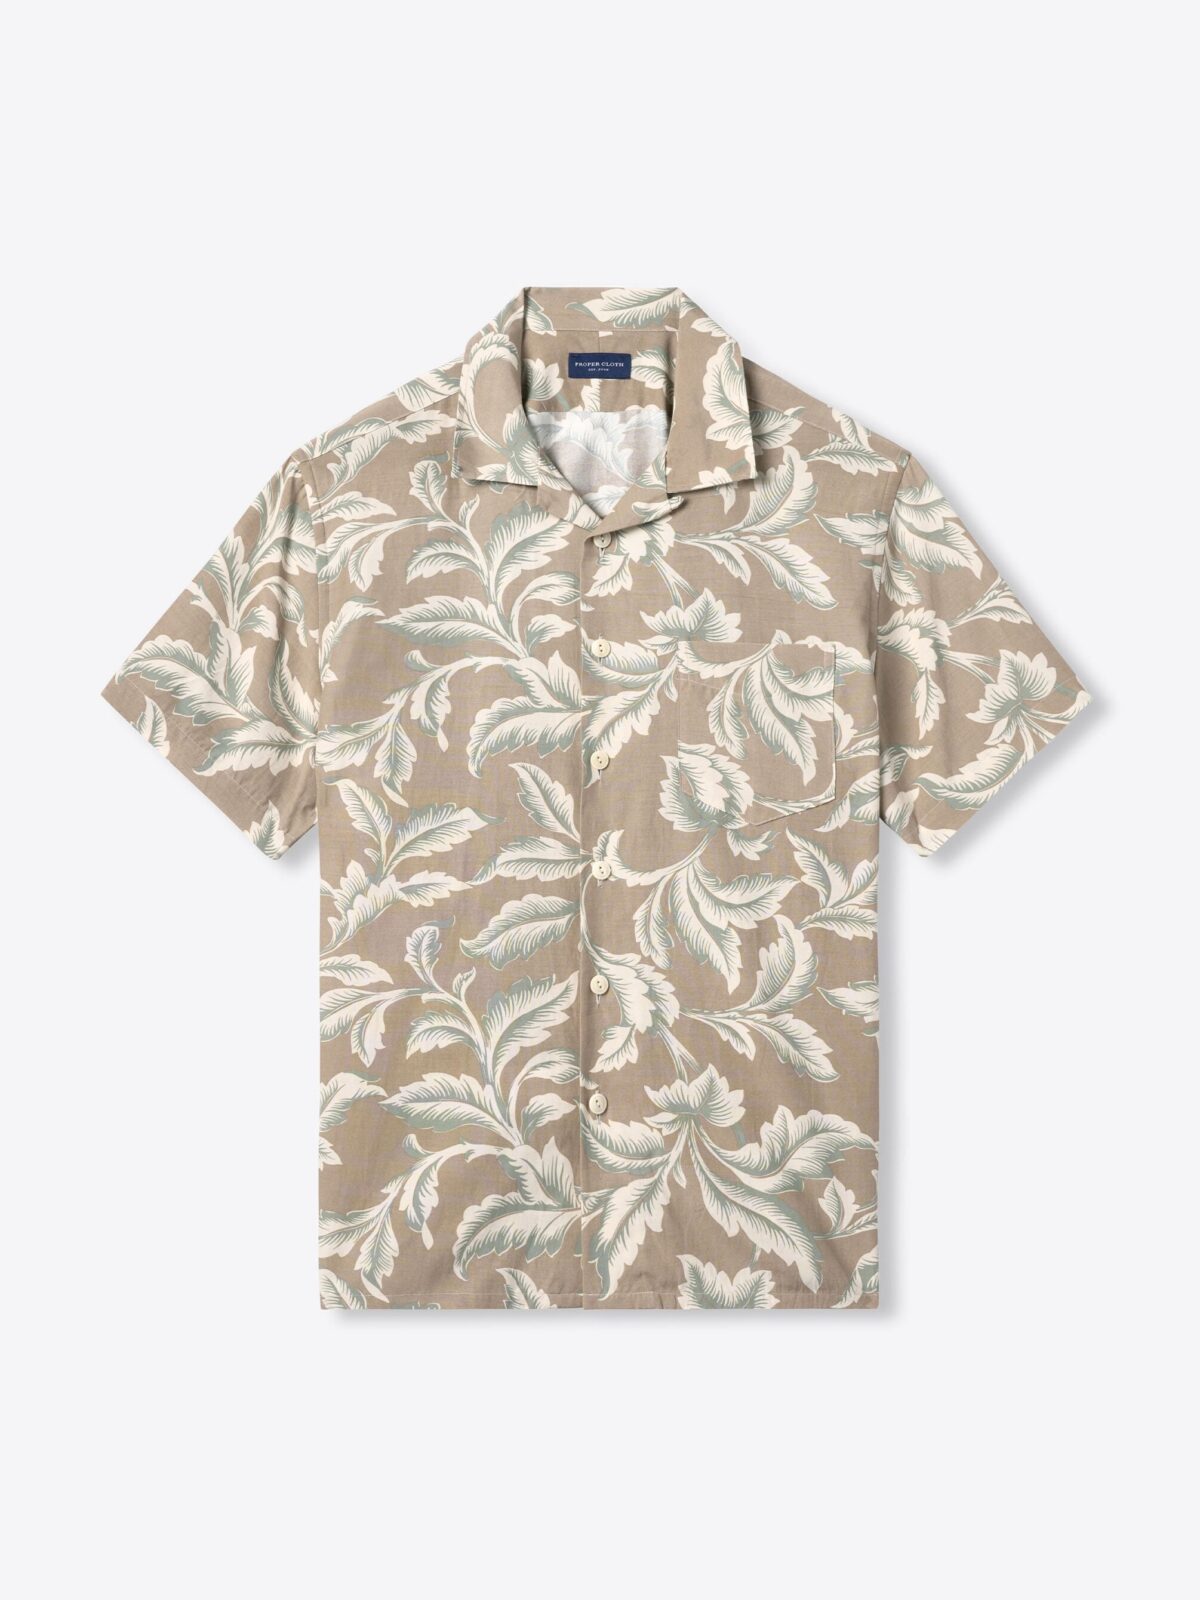 Japanese Beige Rayon Blend Aloha Print Shirt by Proper Cloth